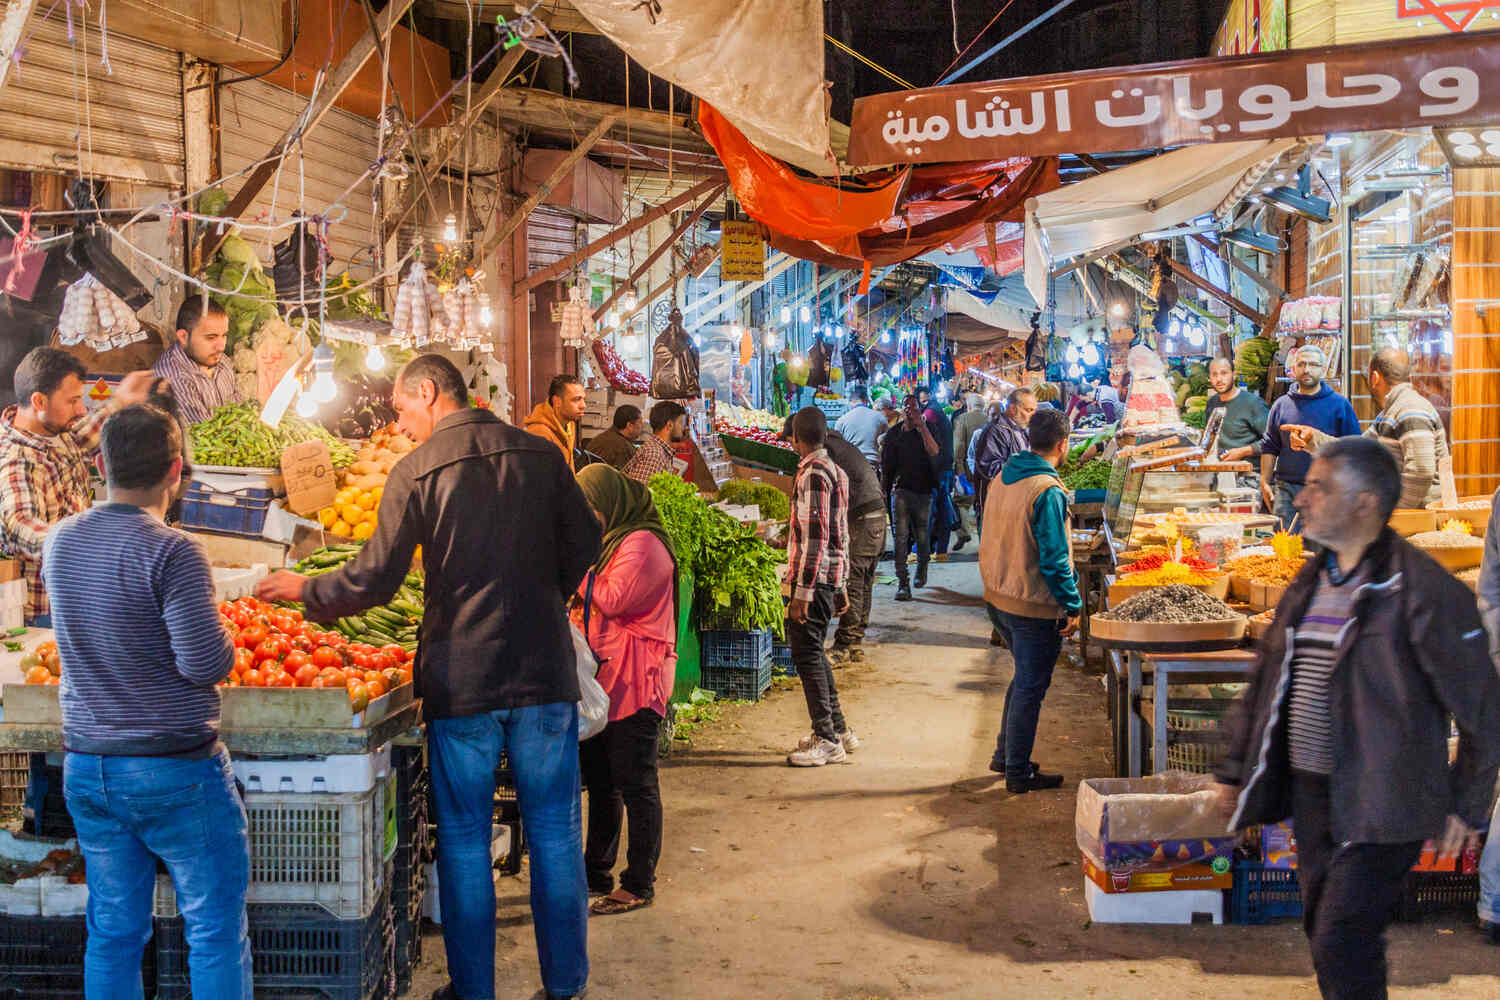 Bustling street market in Amman with fruit stalls.